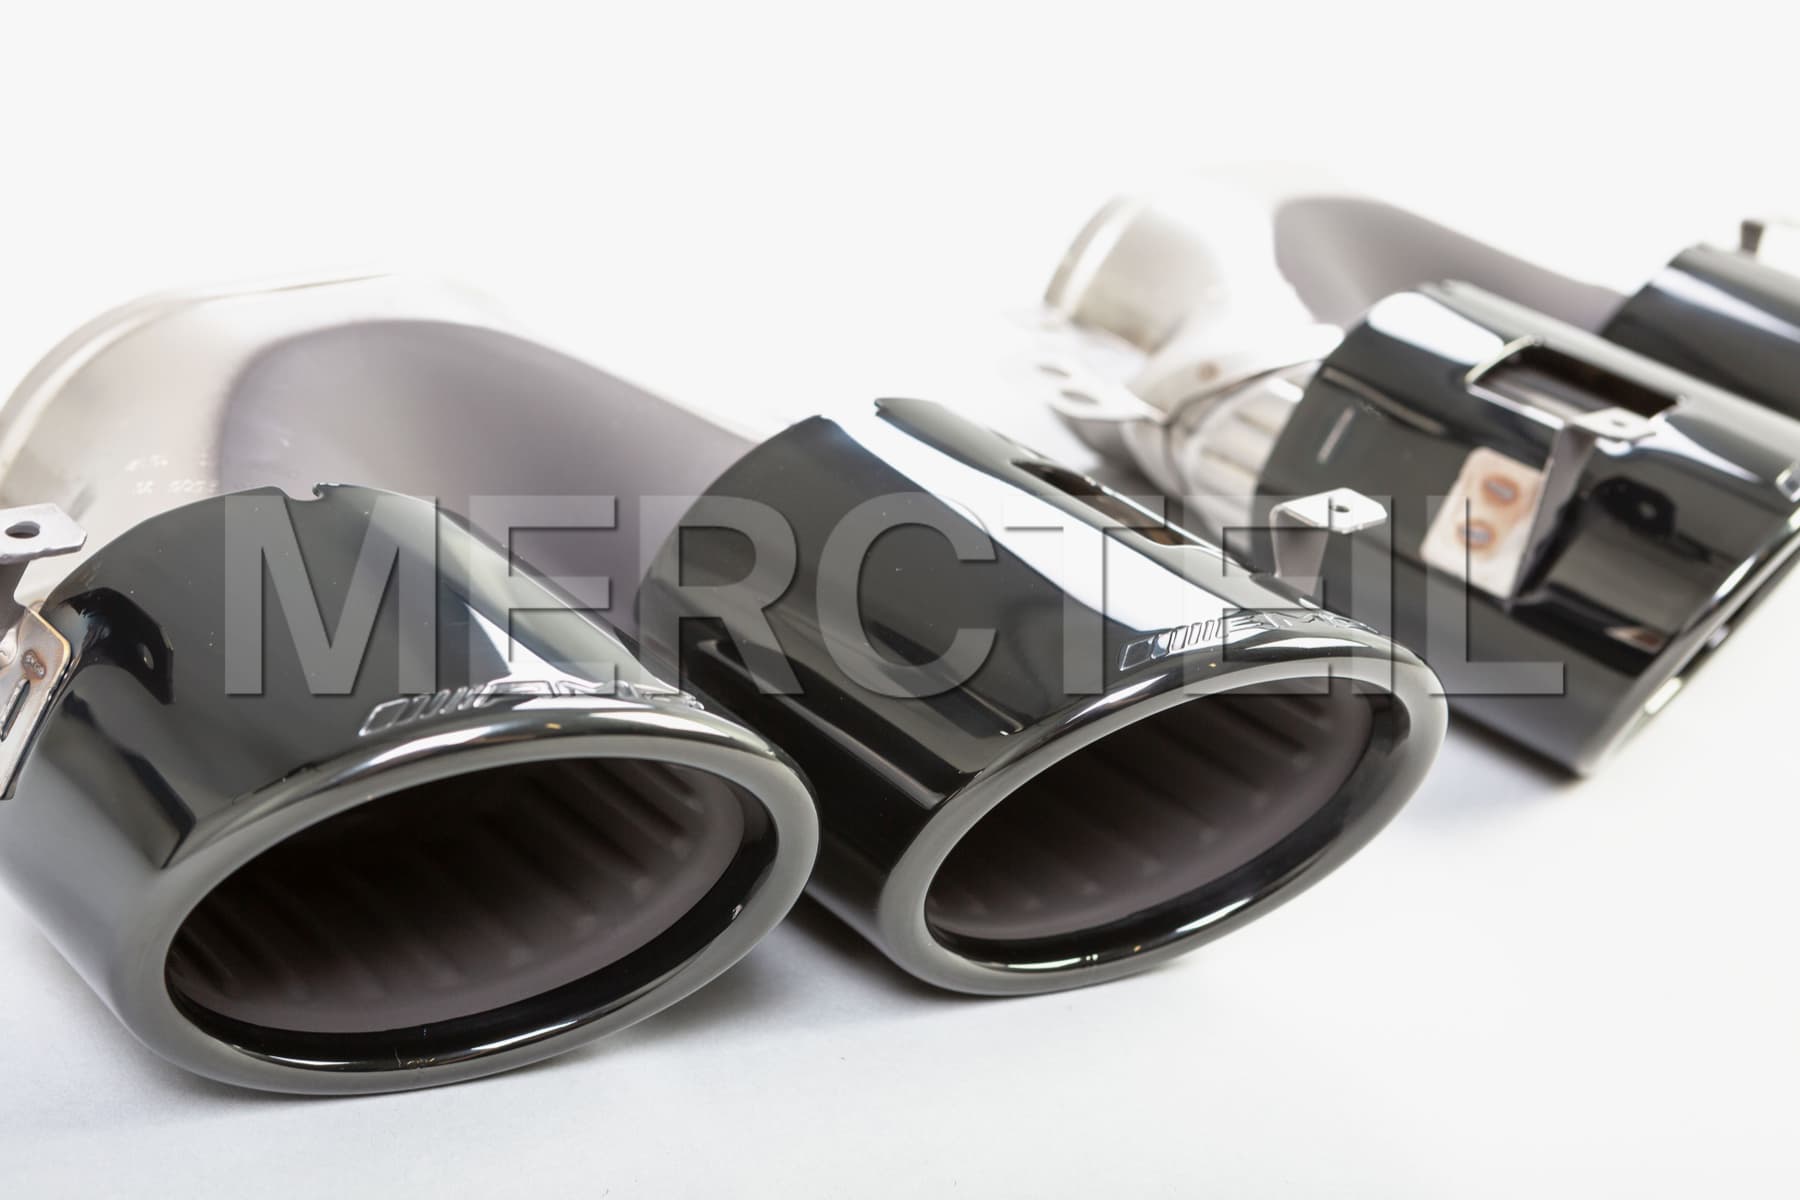 https://mercteil.com/s3/black-exhaust-tailpipe-covers-45-s-amg-look-kit-c-x-118-w-177-h-247-genuine-mercedes-amg-1691411143955-x2.jpg